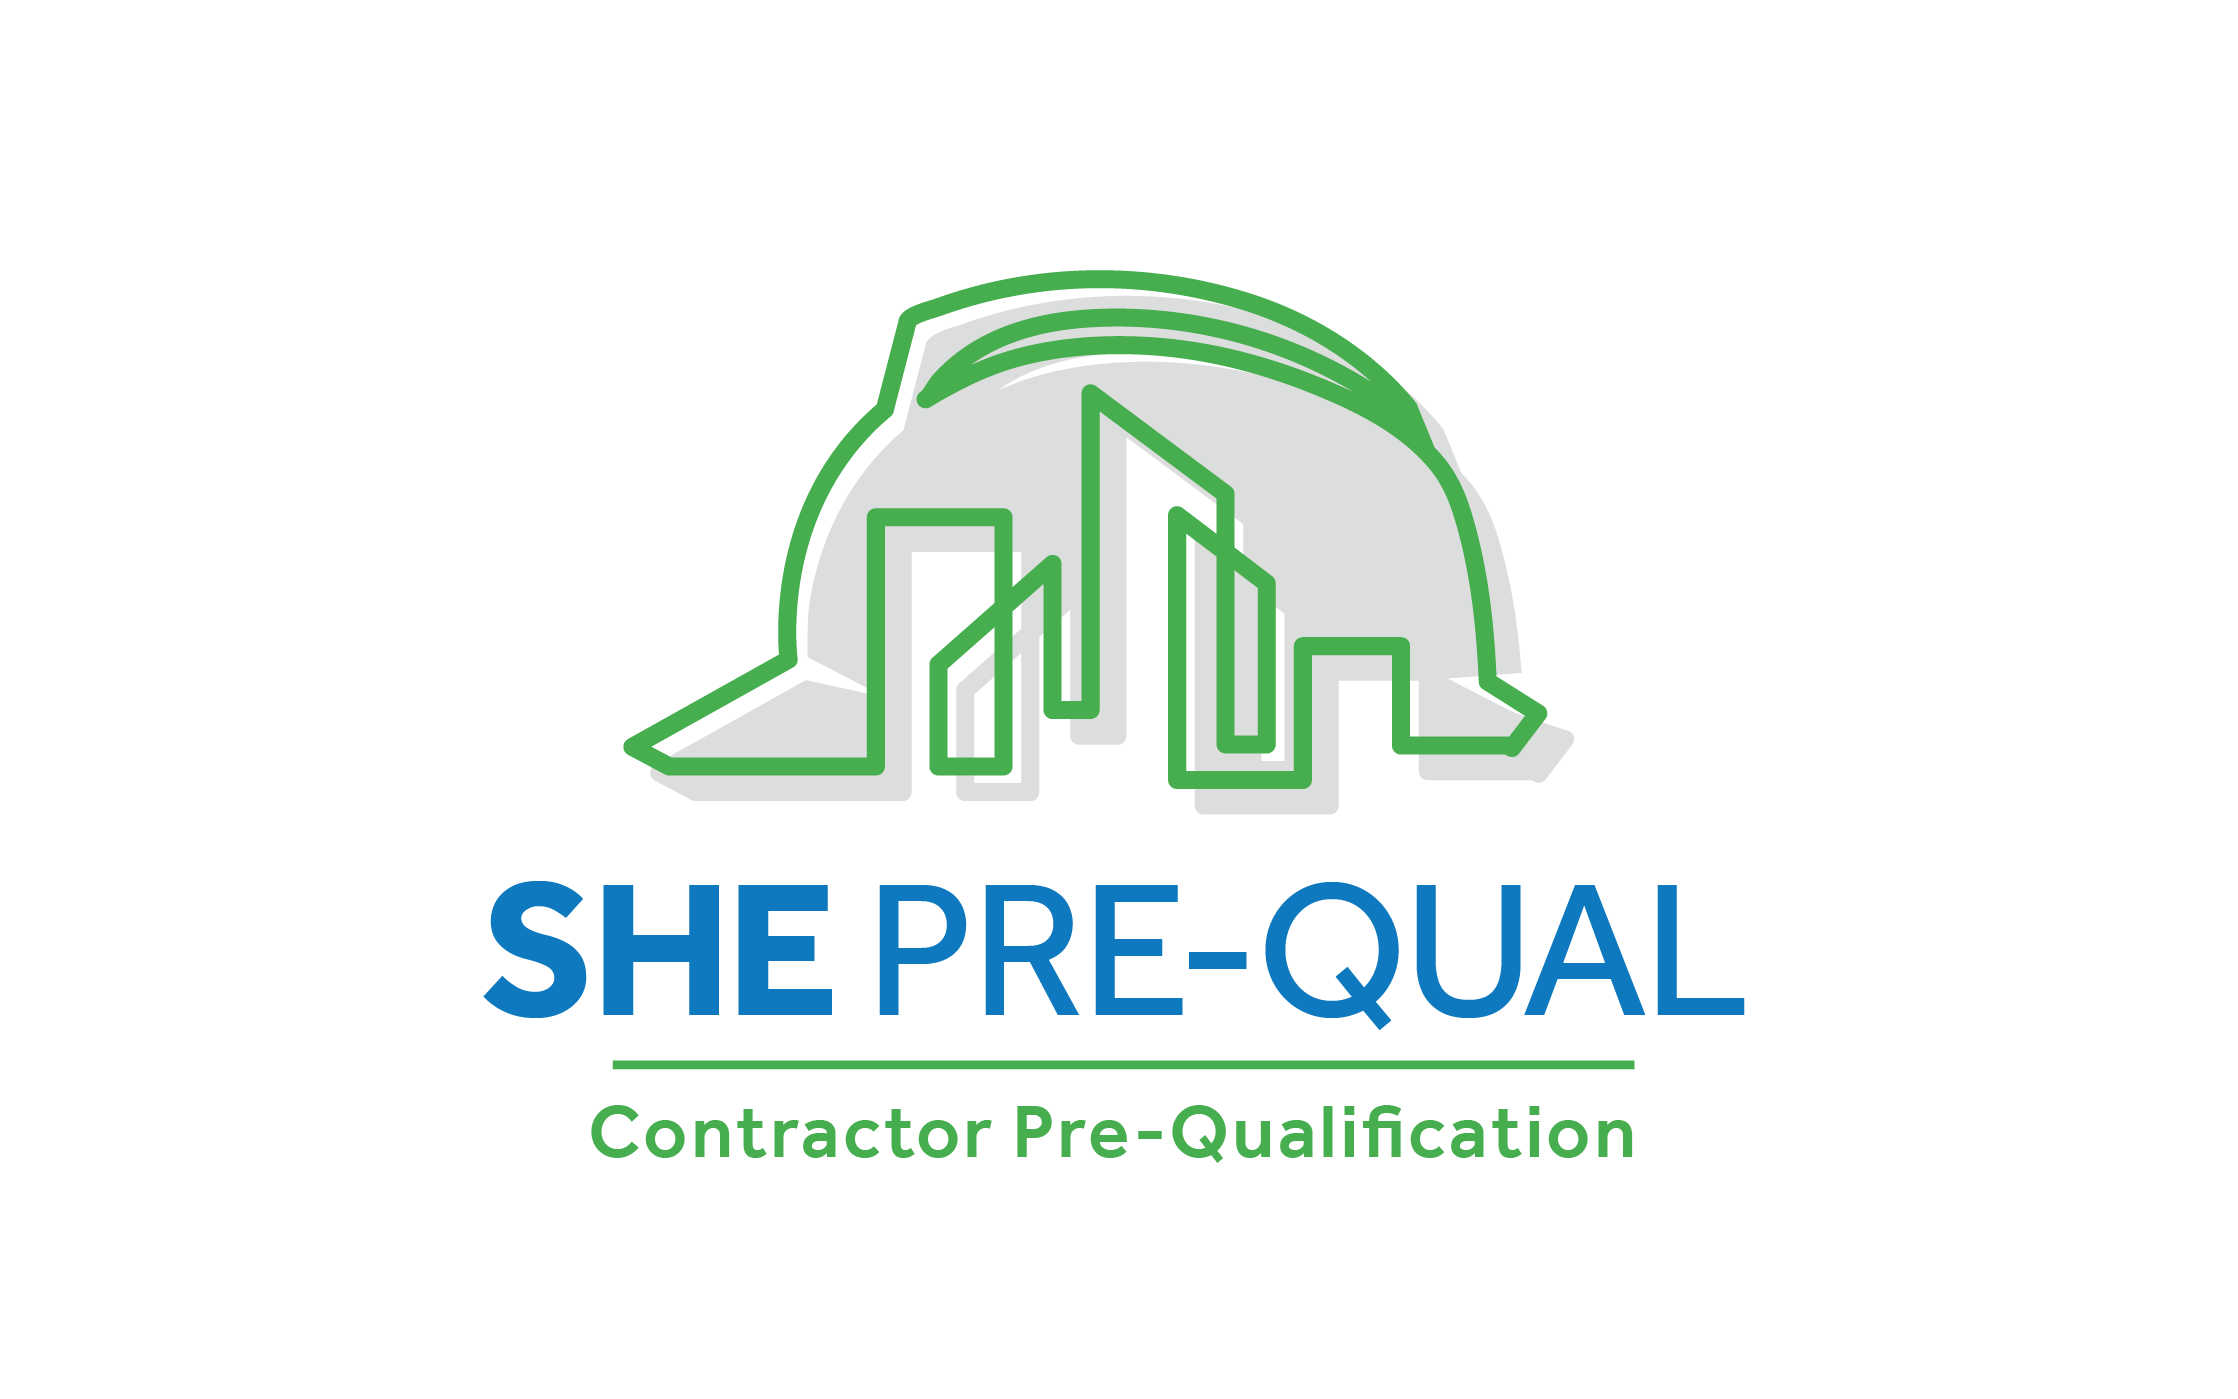 Graphic of the SHE Pre-Qual Contractor Pre-Qualification logo